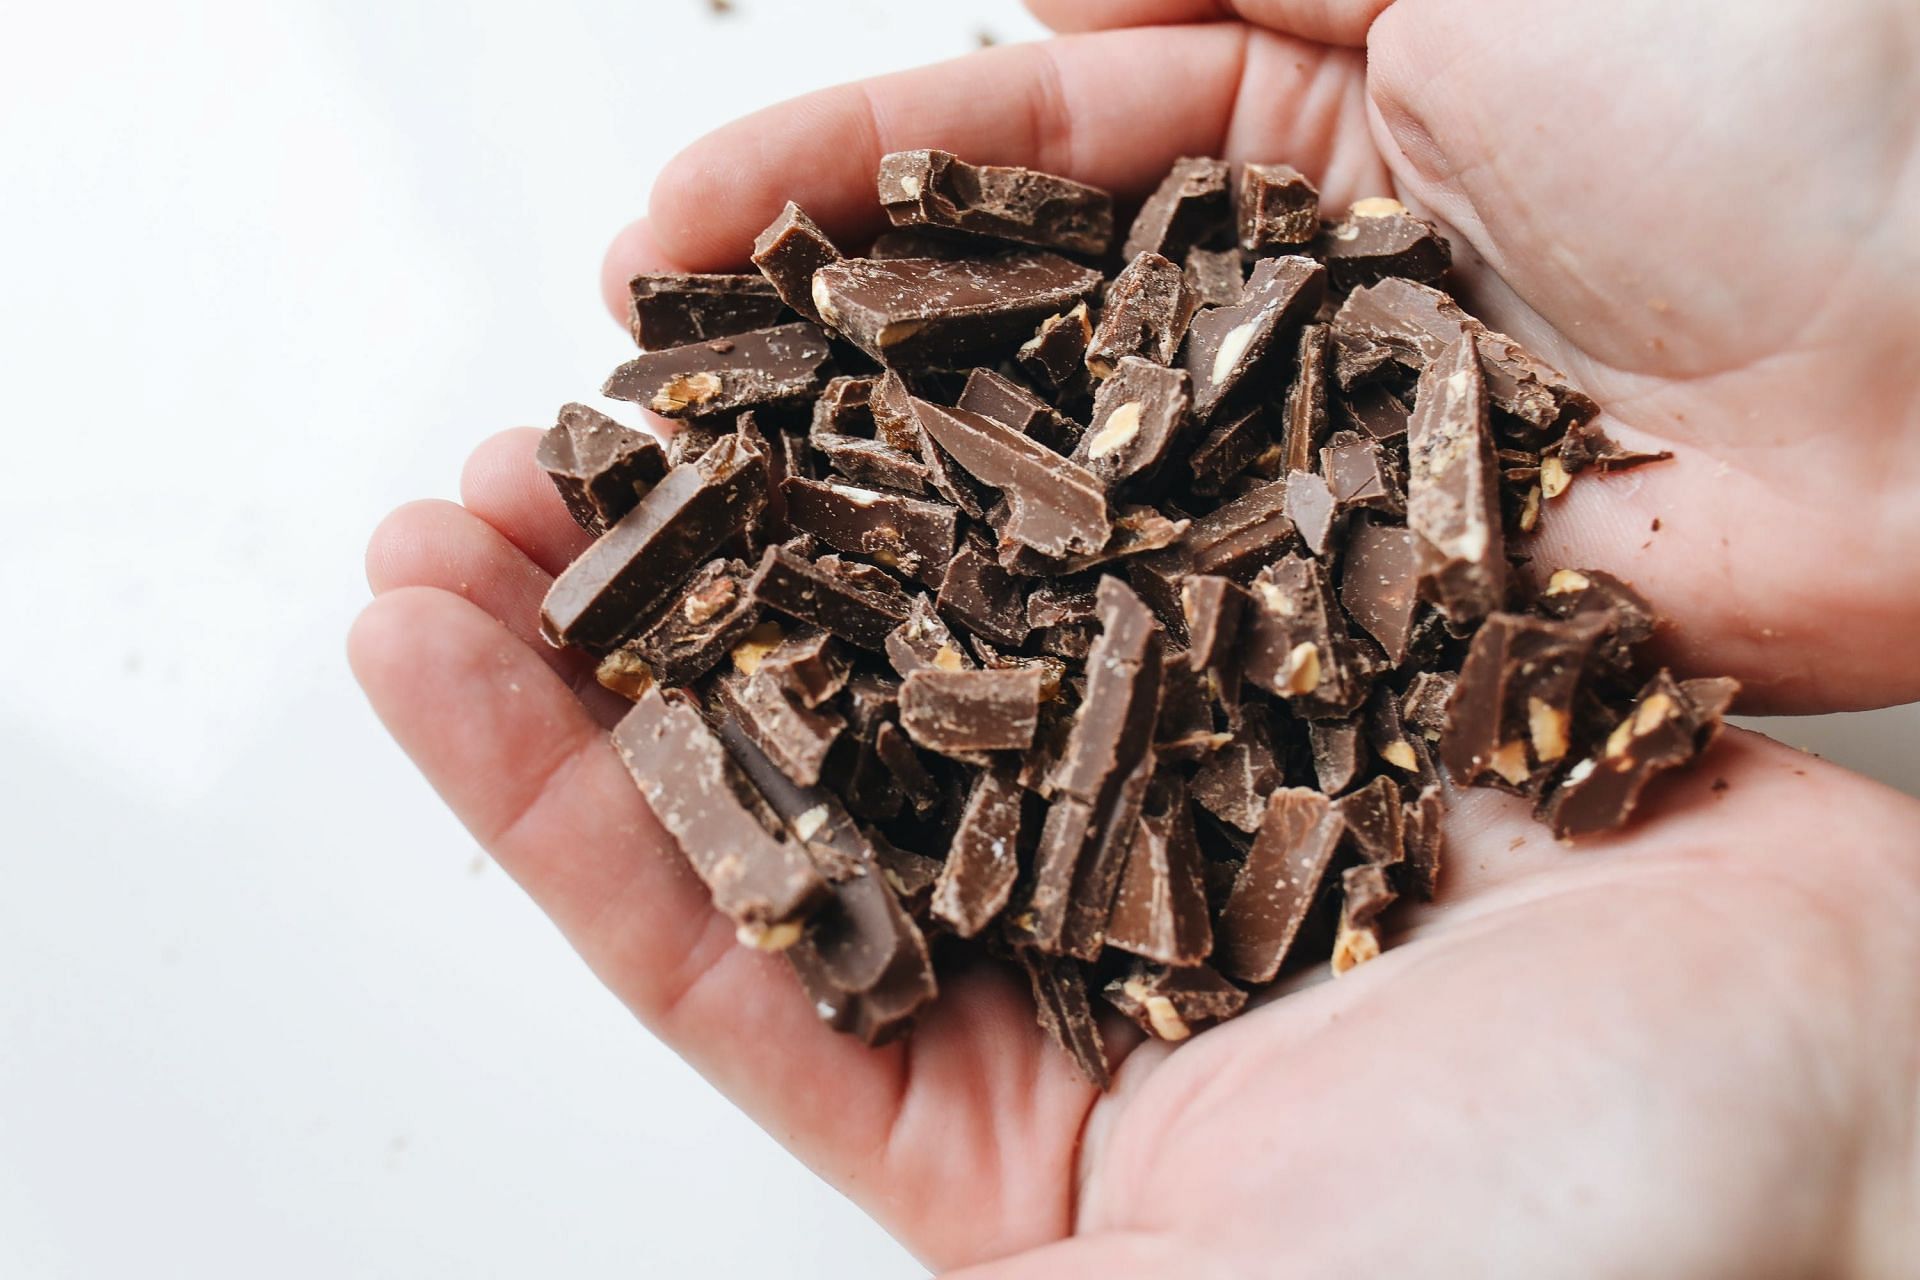 Dark chocolate as food to stimulate brain (Image sourced via Pexels / Photo by polina)